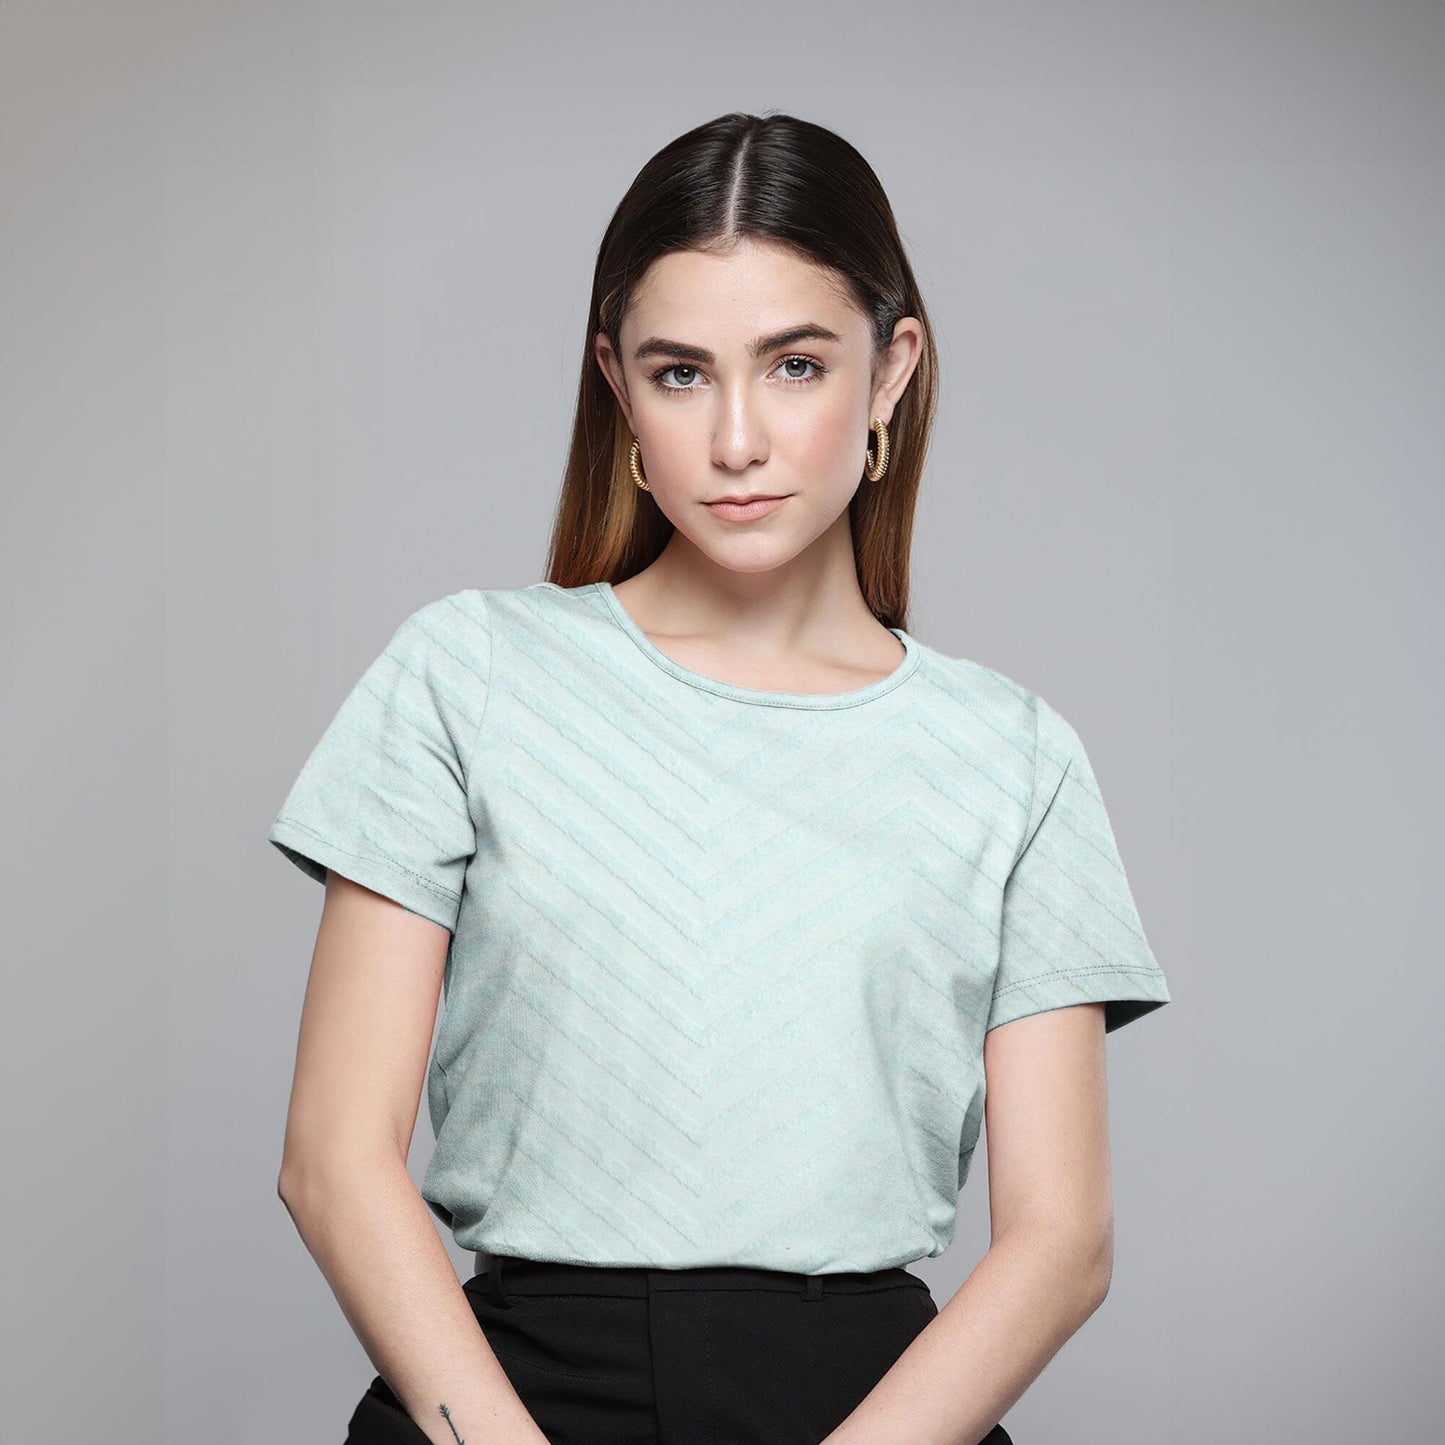 Max 21 Women's Serra Style Short Sleeve Tee Shirt